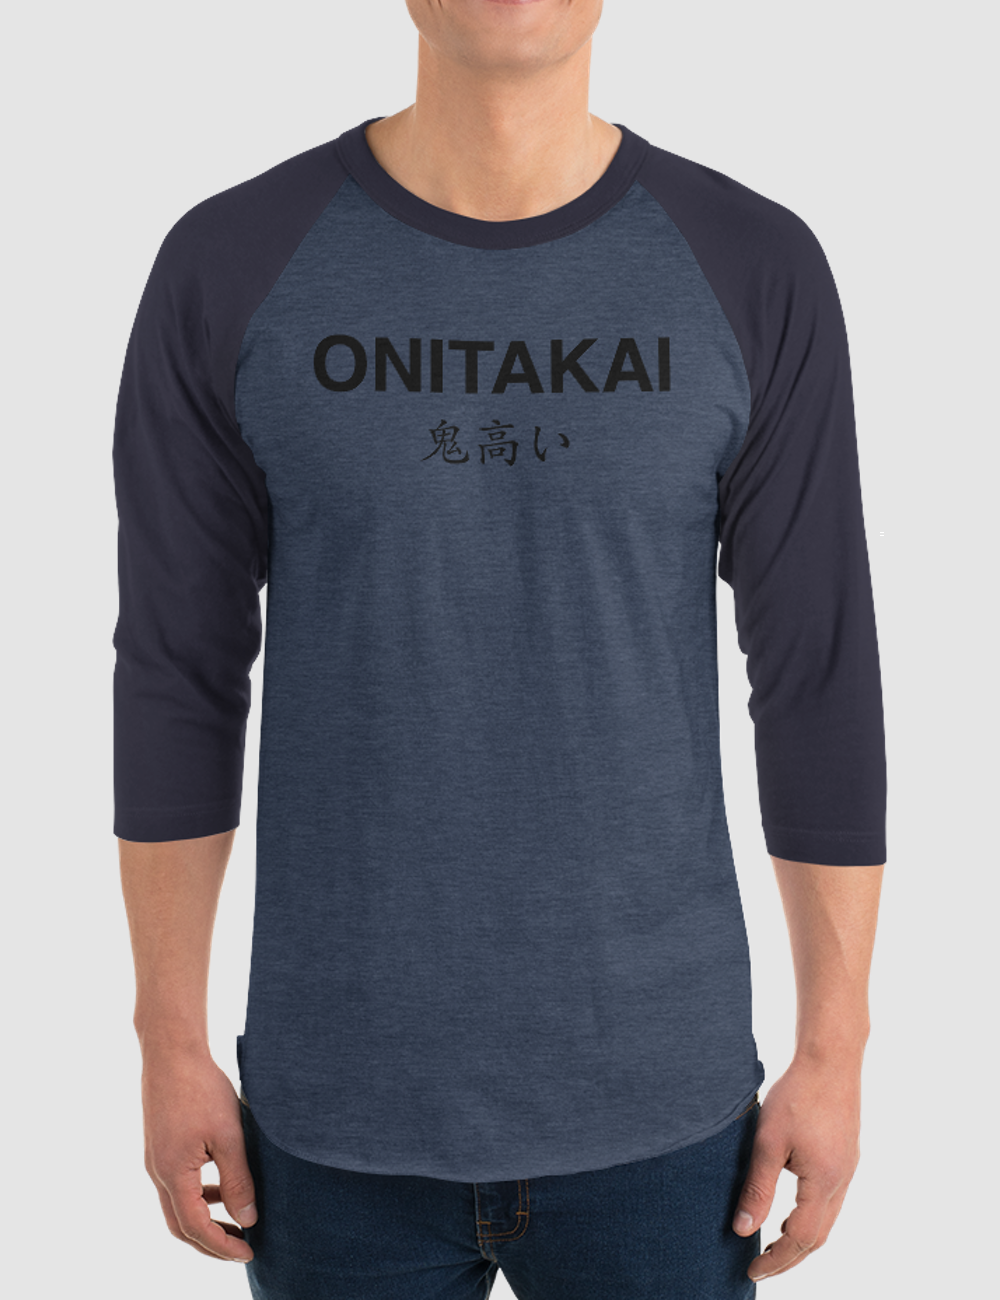 Signature OniTakai Kanji | Baseball Shirt OniTakai